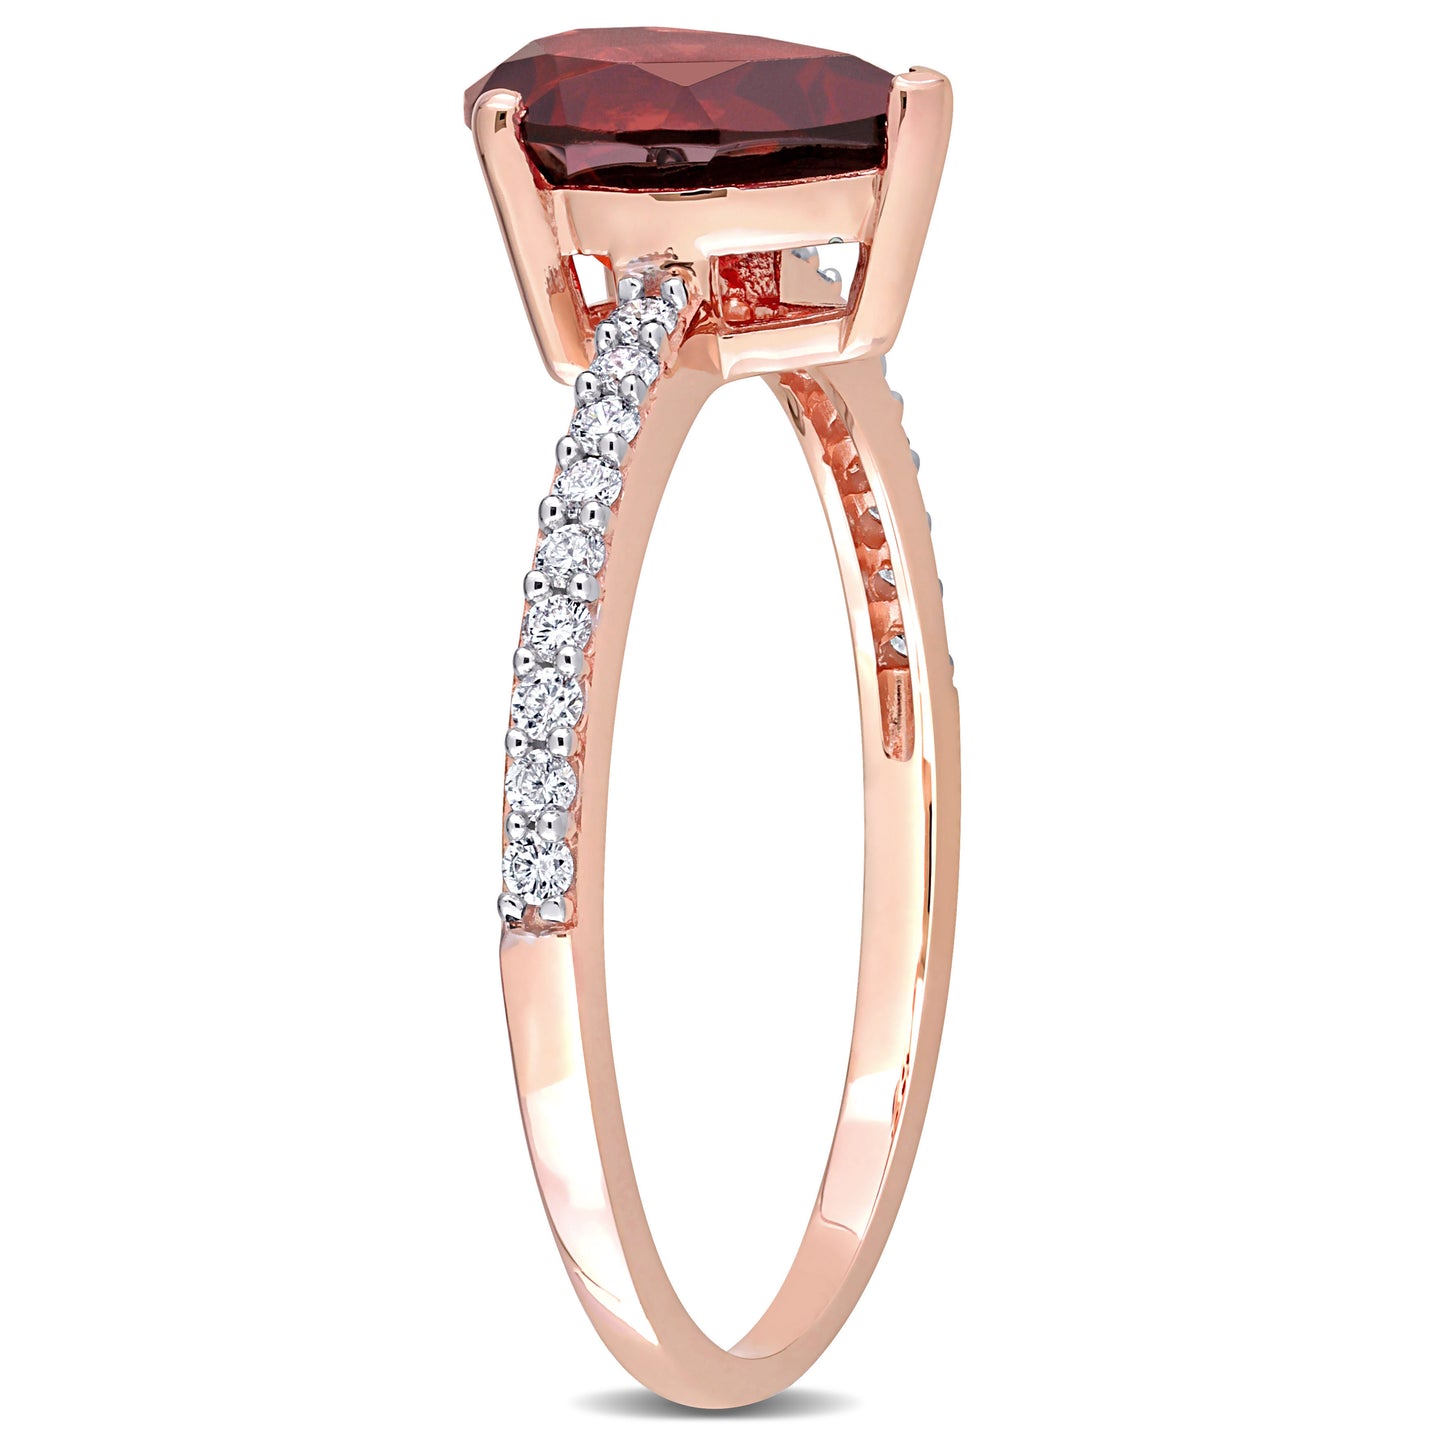 Garnet & Diamond Pear Cut Ring in 14k Rose Gold